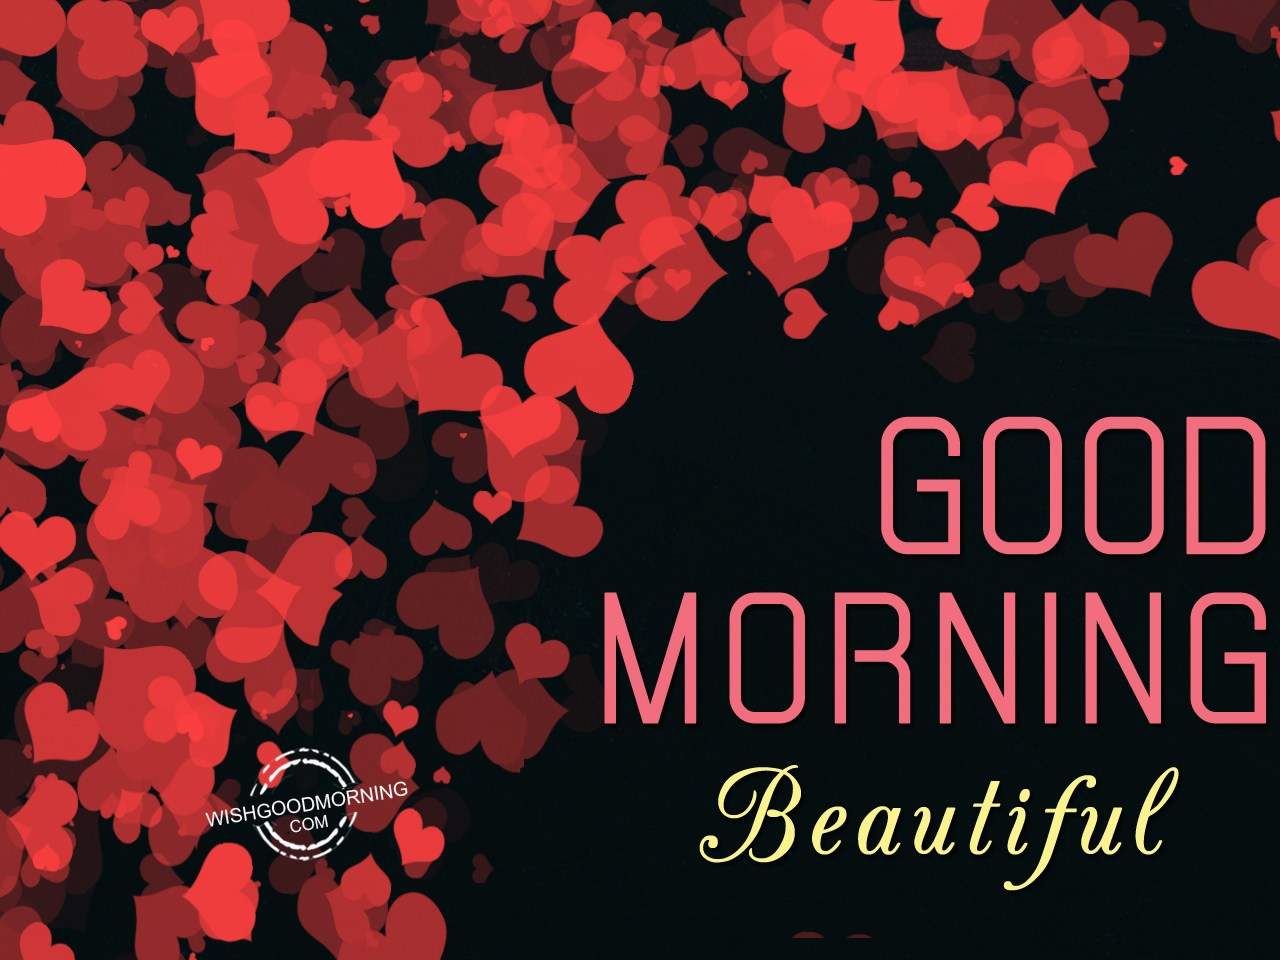 Good Morning Beautiful - Good Morning Pictures – WishGoodMorning.com